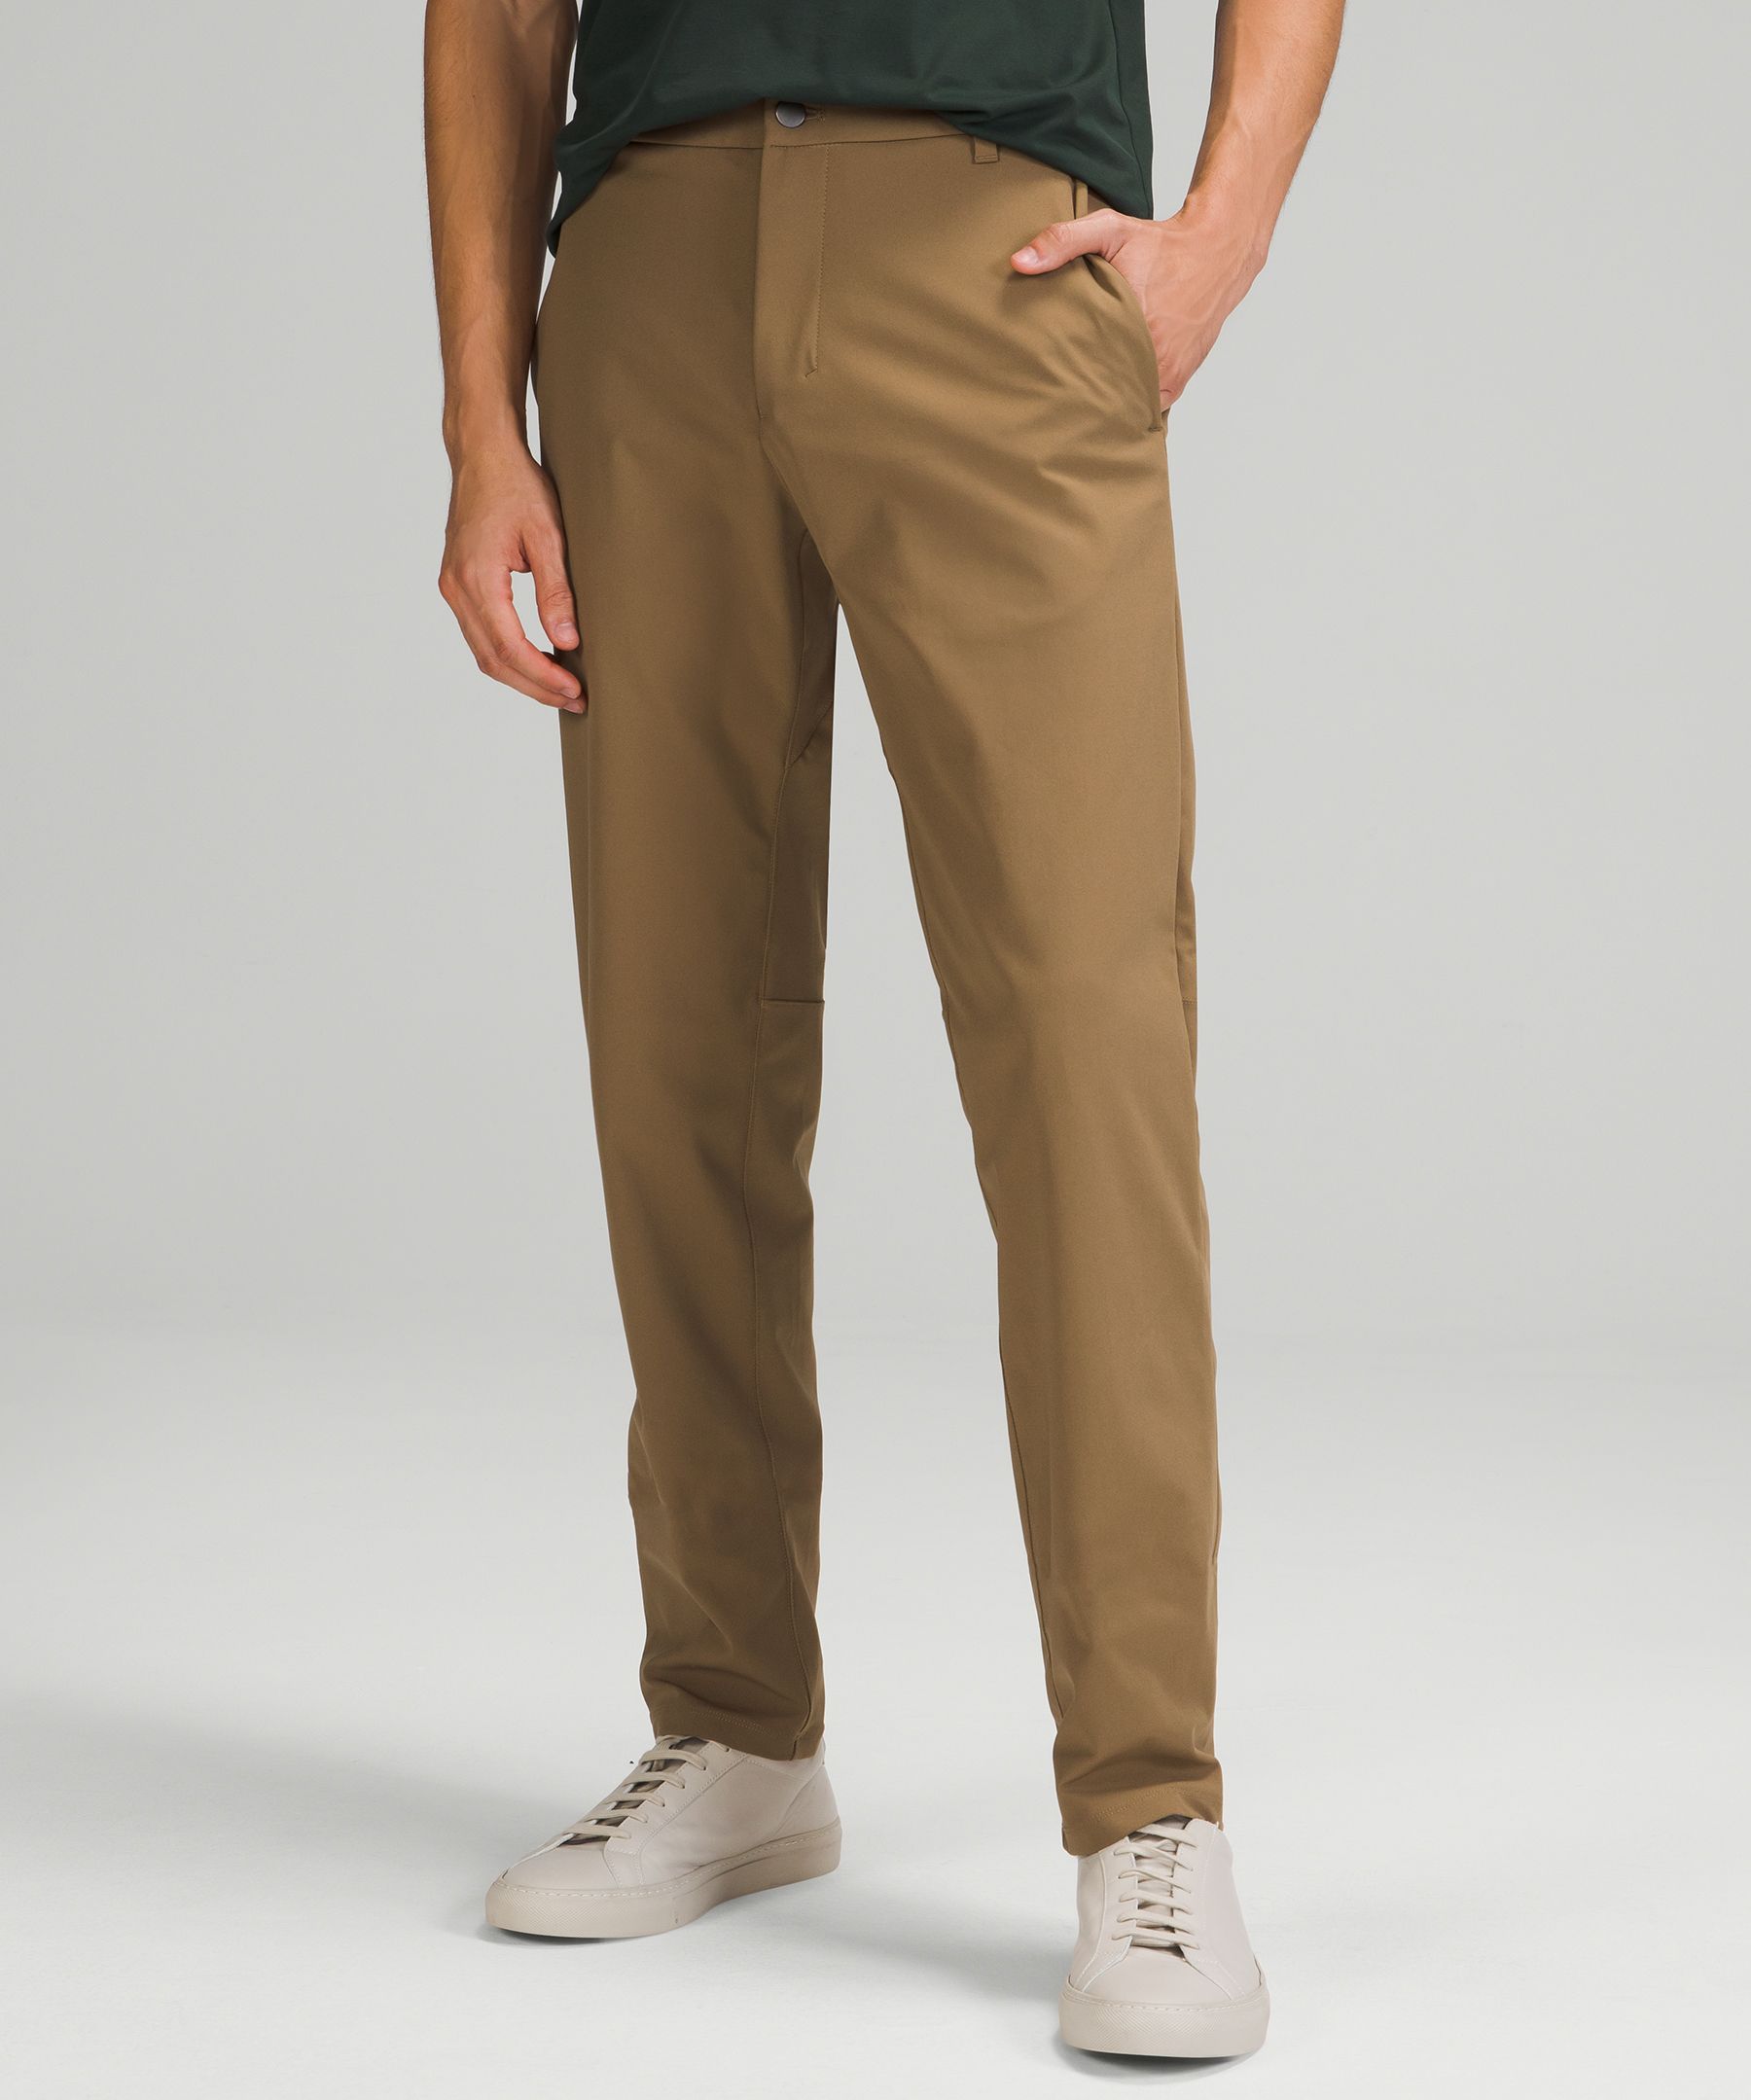 lululemon abc pants business casual